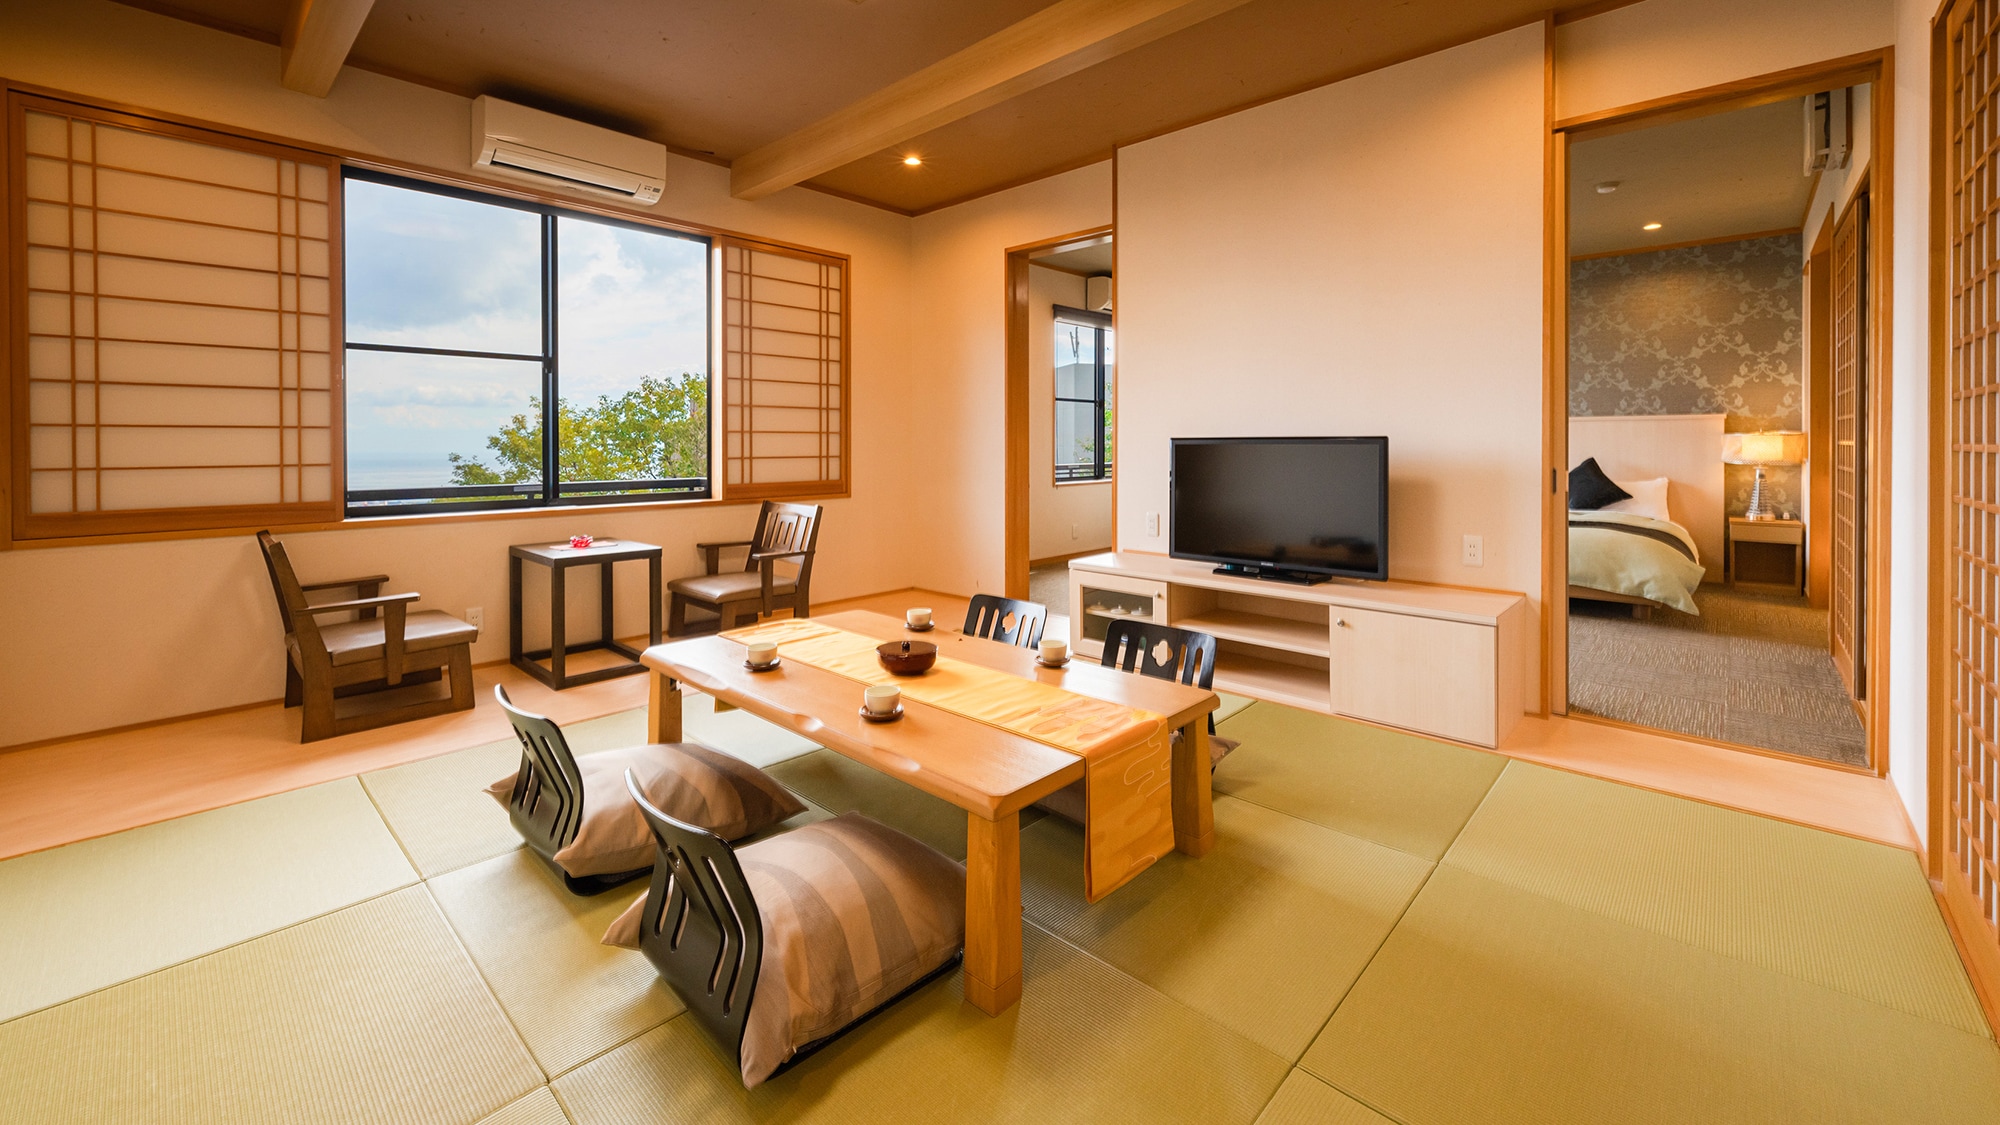 ◆ Oka no Sou ◇ 日西式房間“薊” ◆ 日式房間和西式房間之間。推薦團體旅行